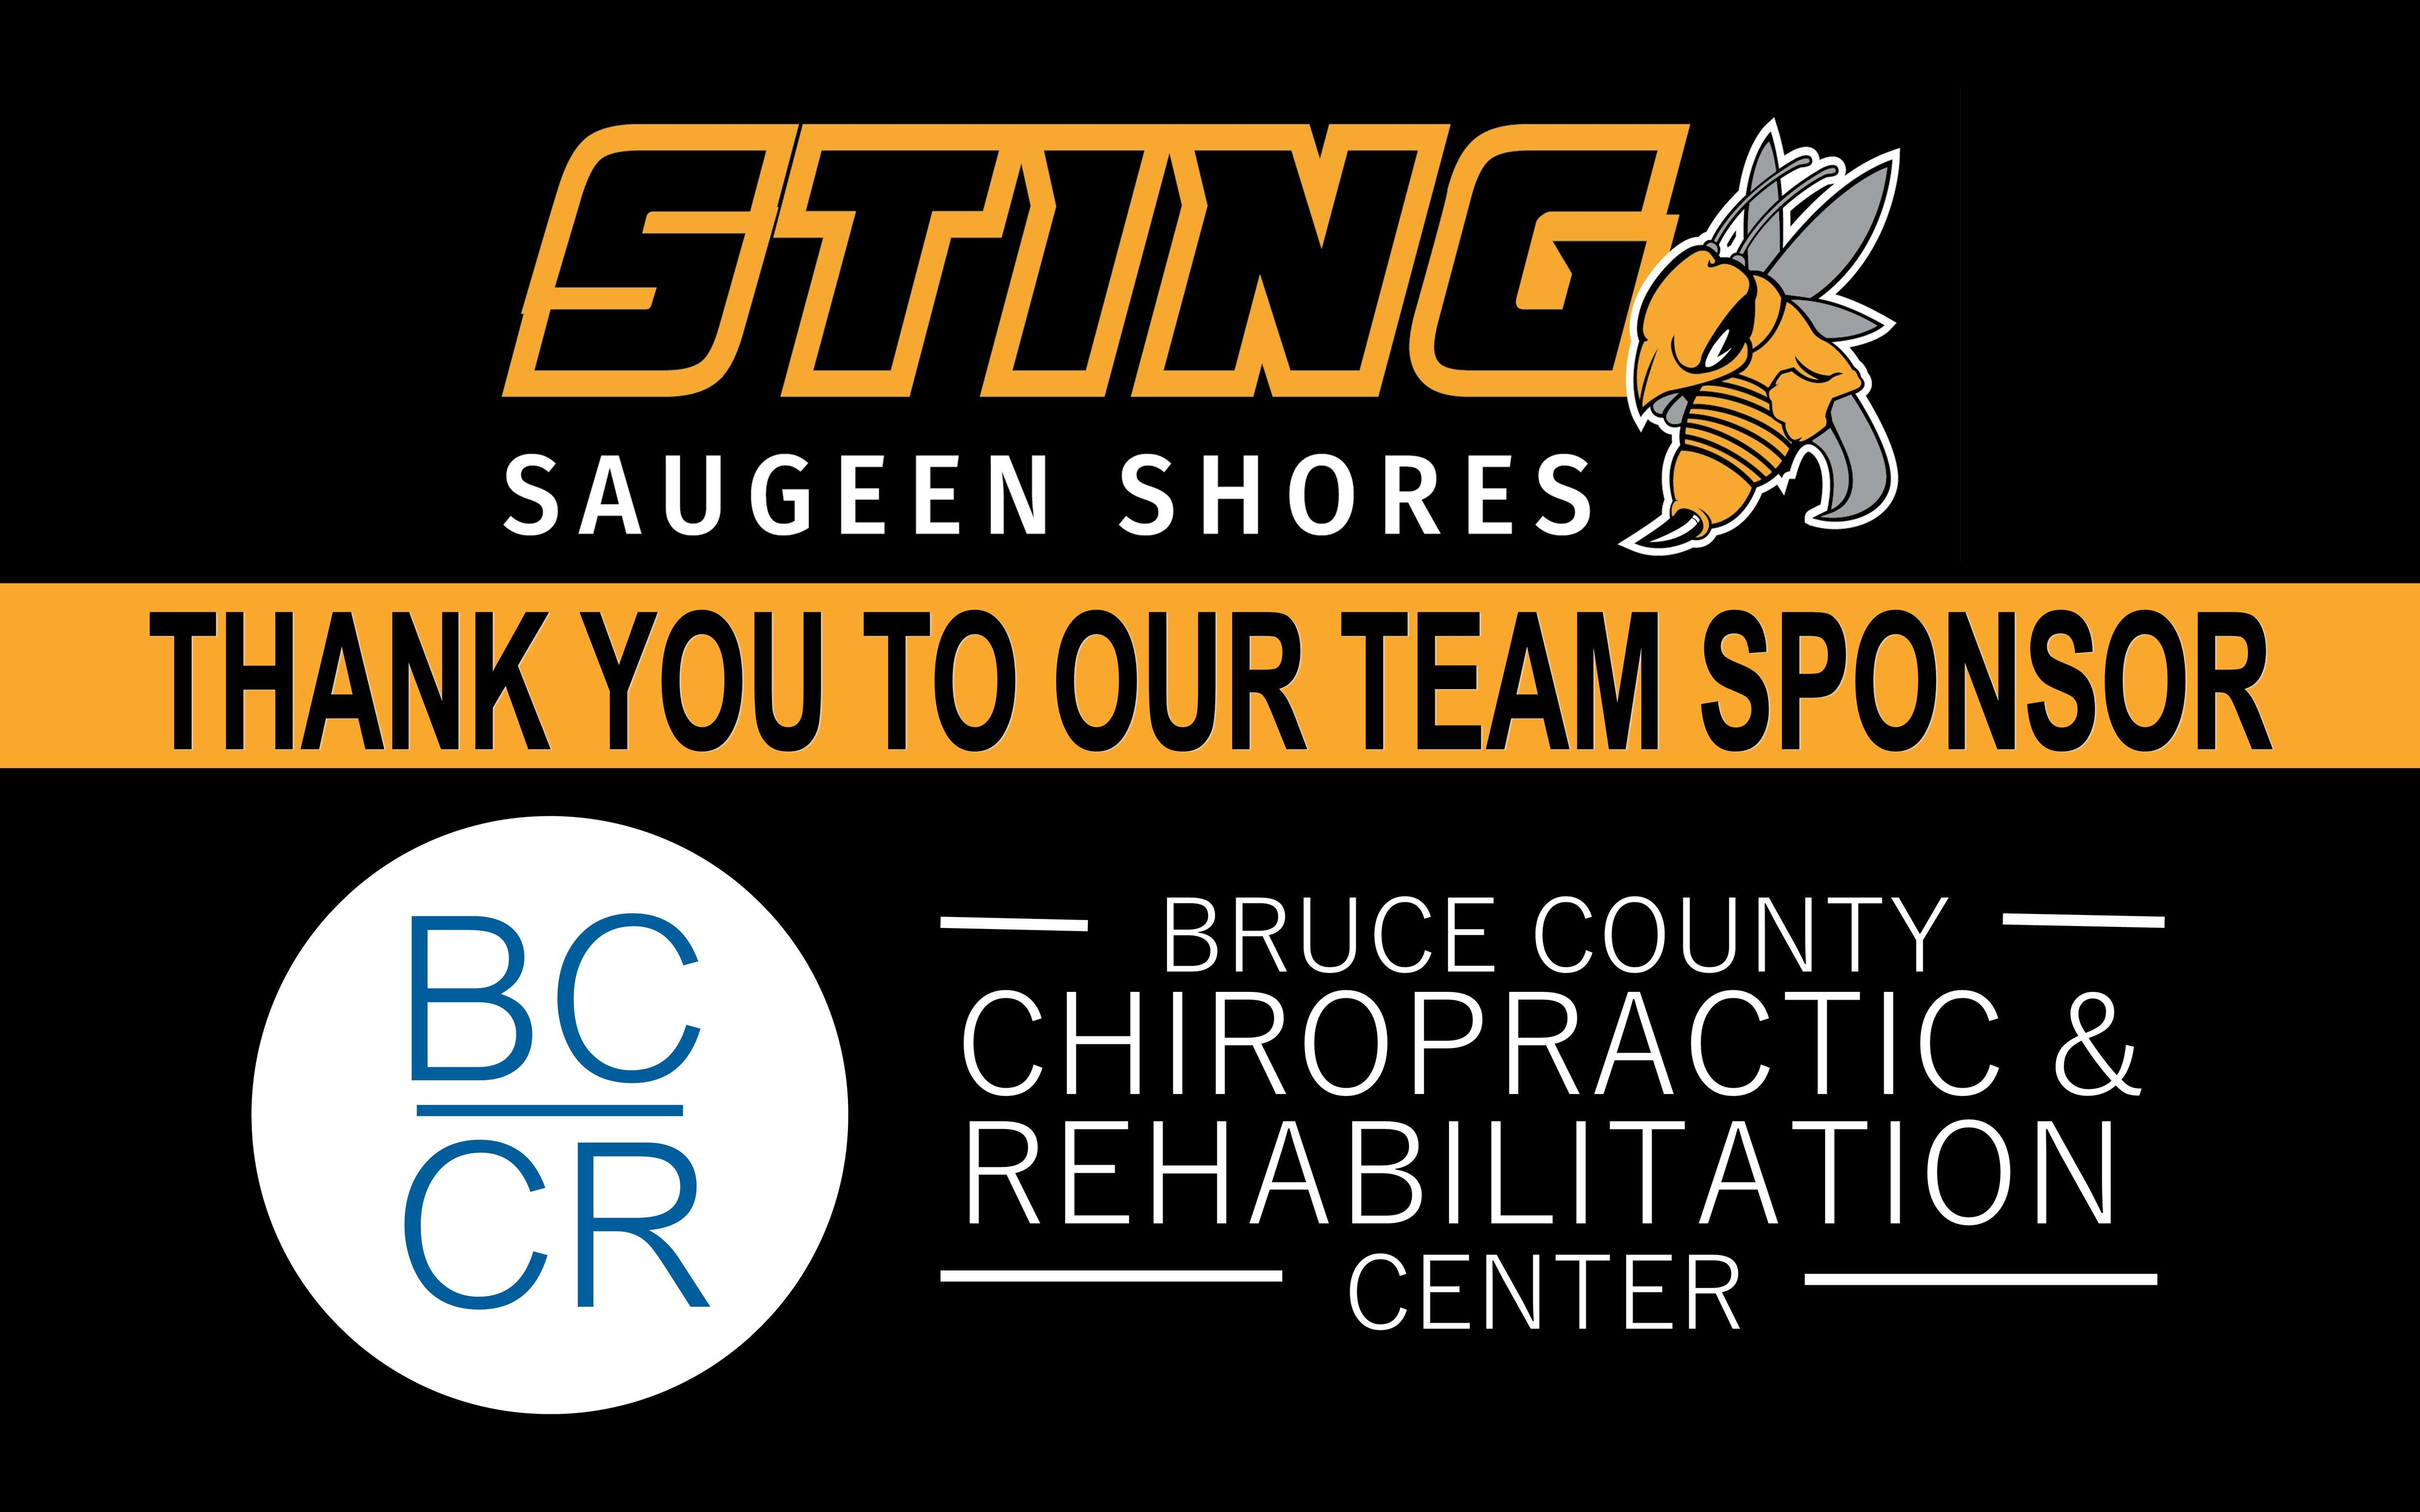 Bruce County Chiropractic & Rehabilitation Center